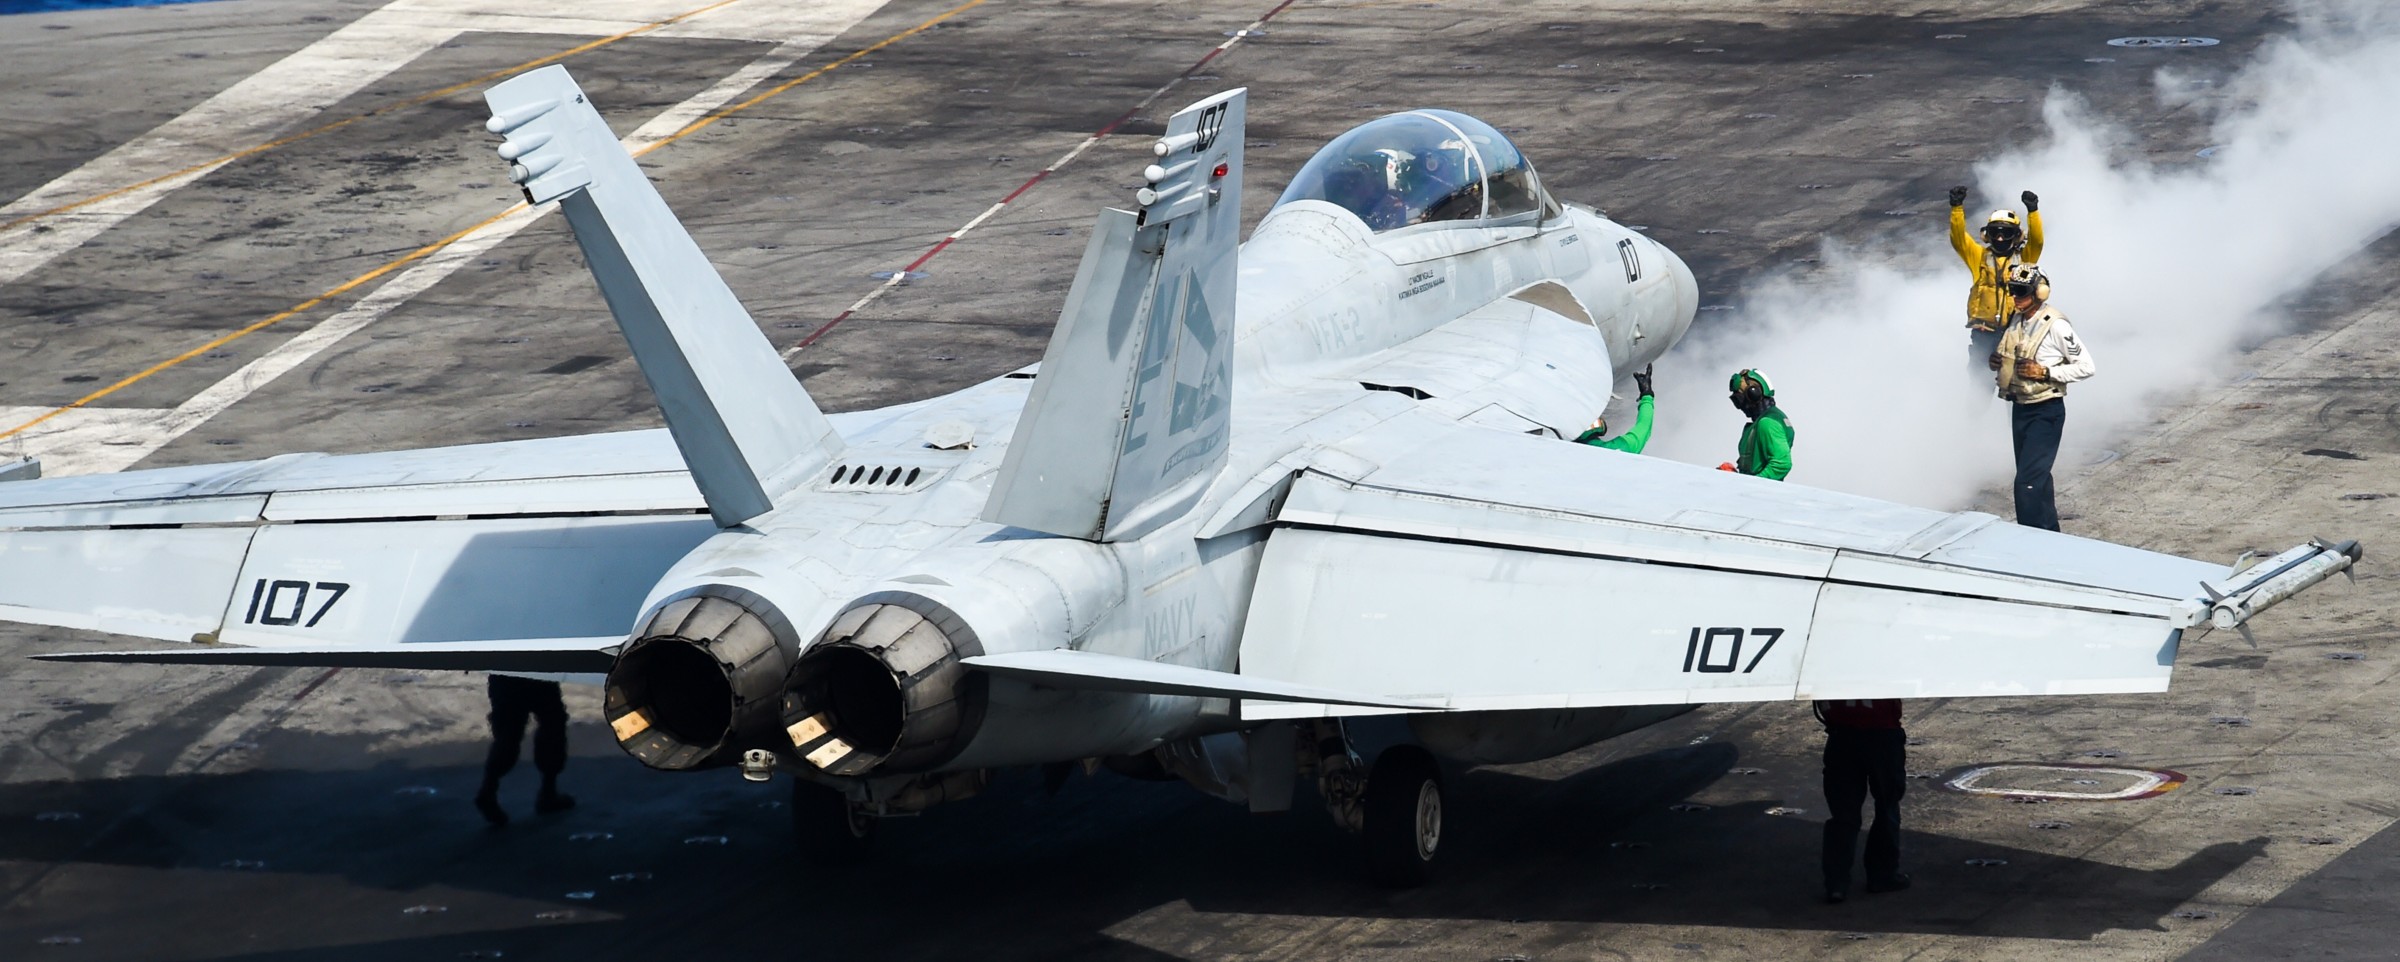 vfa-2 bounty hunters strike fighter squadron us navy f/a-18f super hornet carrier air wing cvw-2 uss carl vinson cvn-70 98